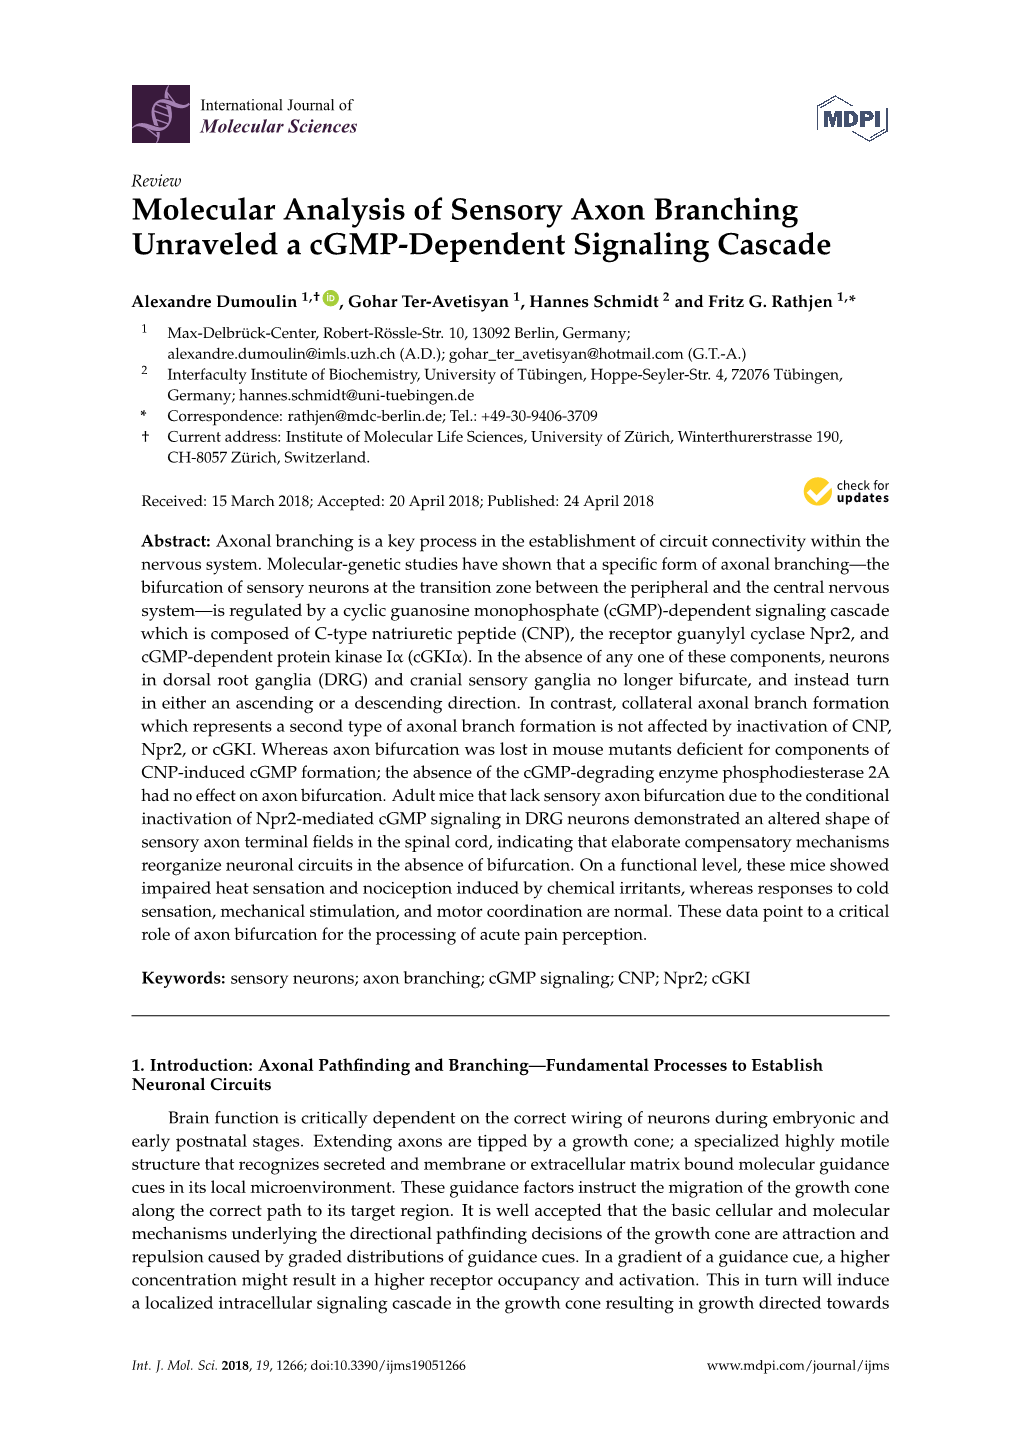 Molecular Analysis of Sensory Axon Branching Unraveled a Cgmp-Dependent Signaling Cascade